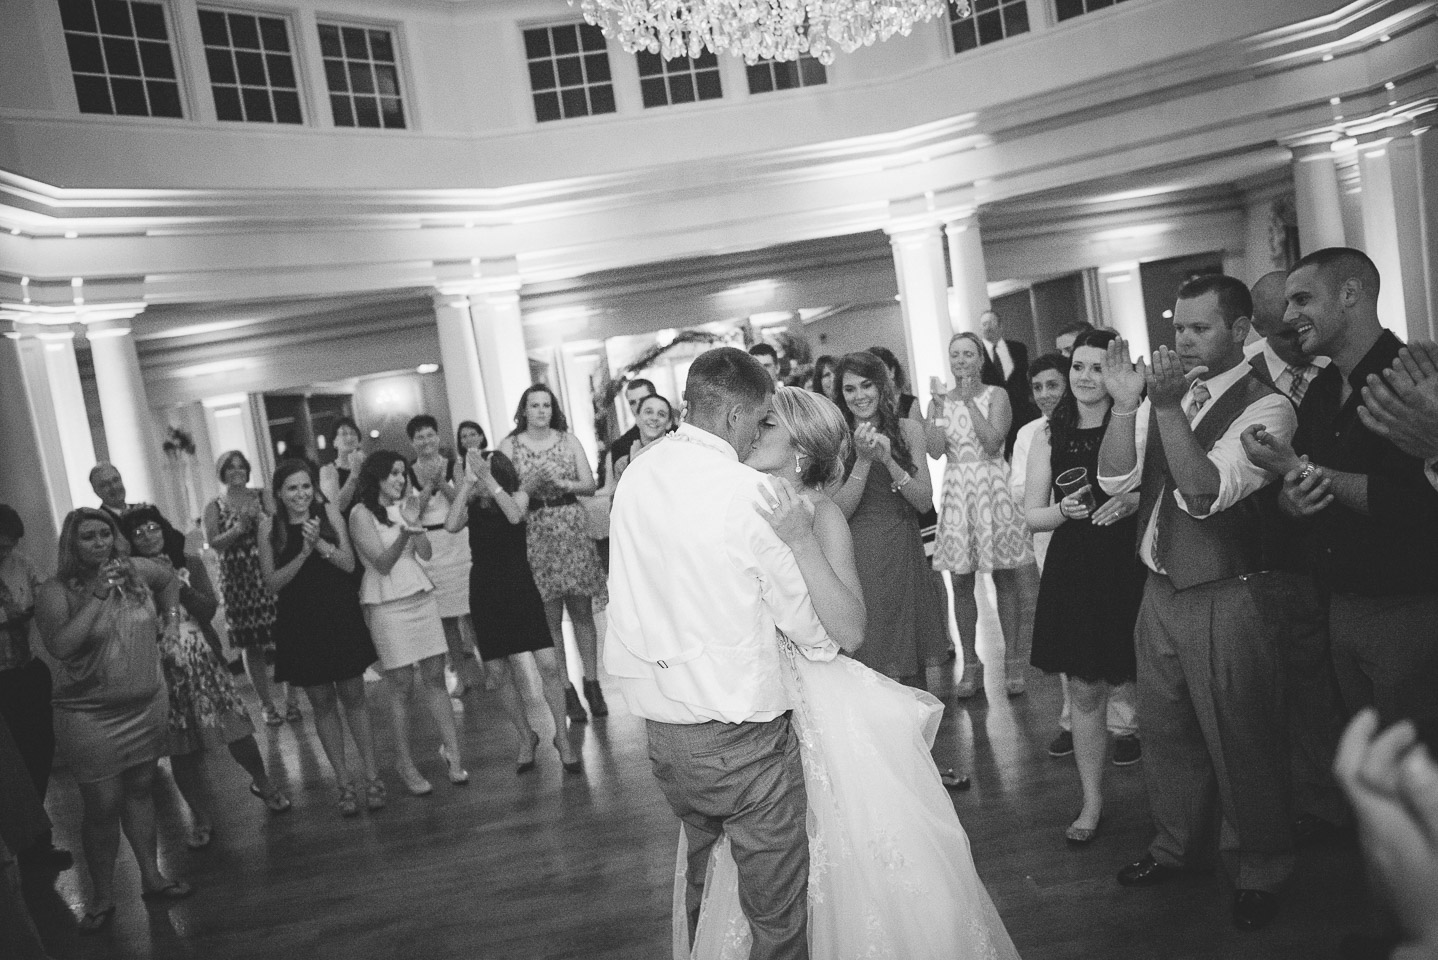 NH Wedding Photographer: dancing at reception